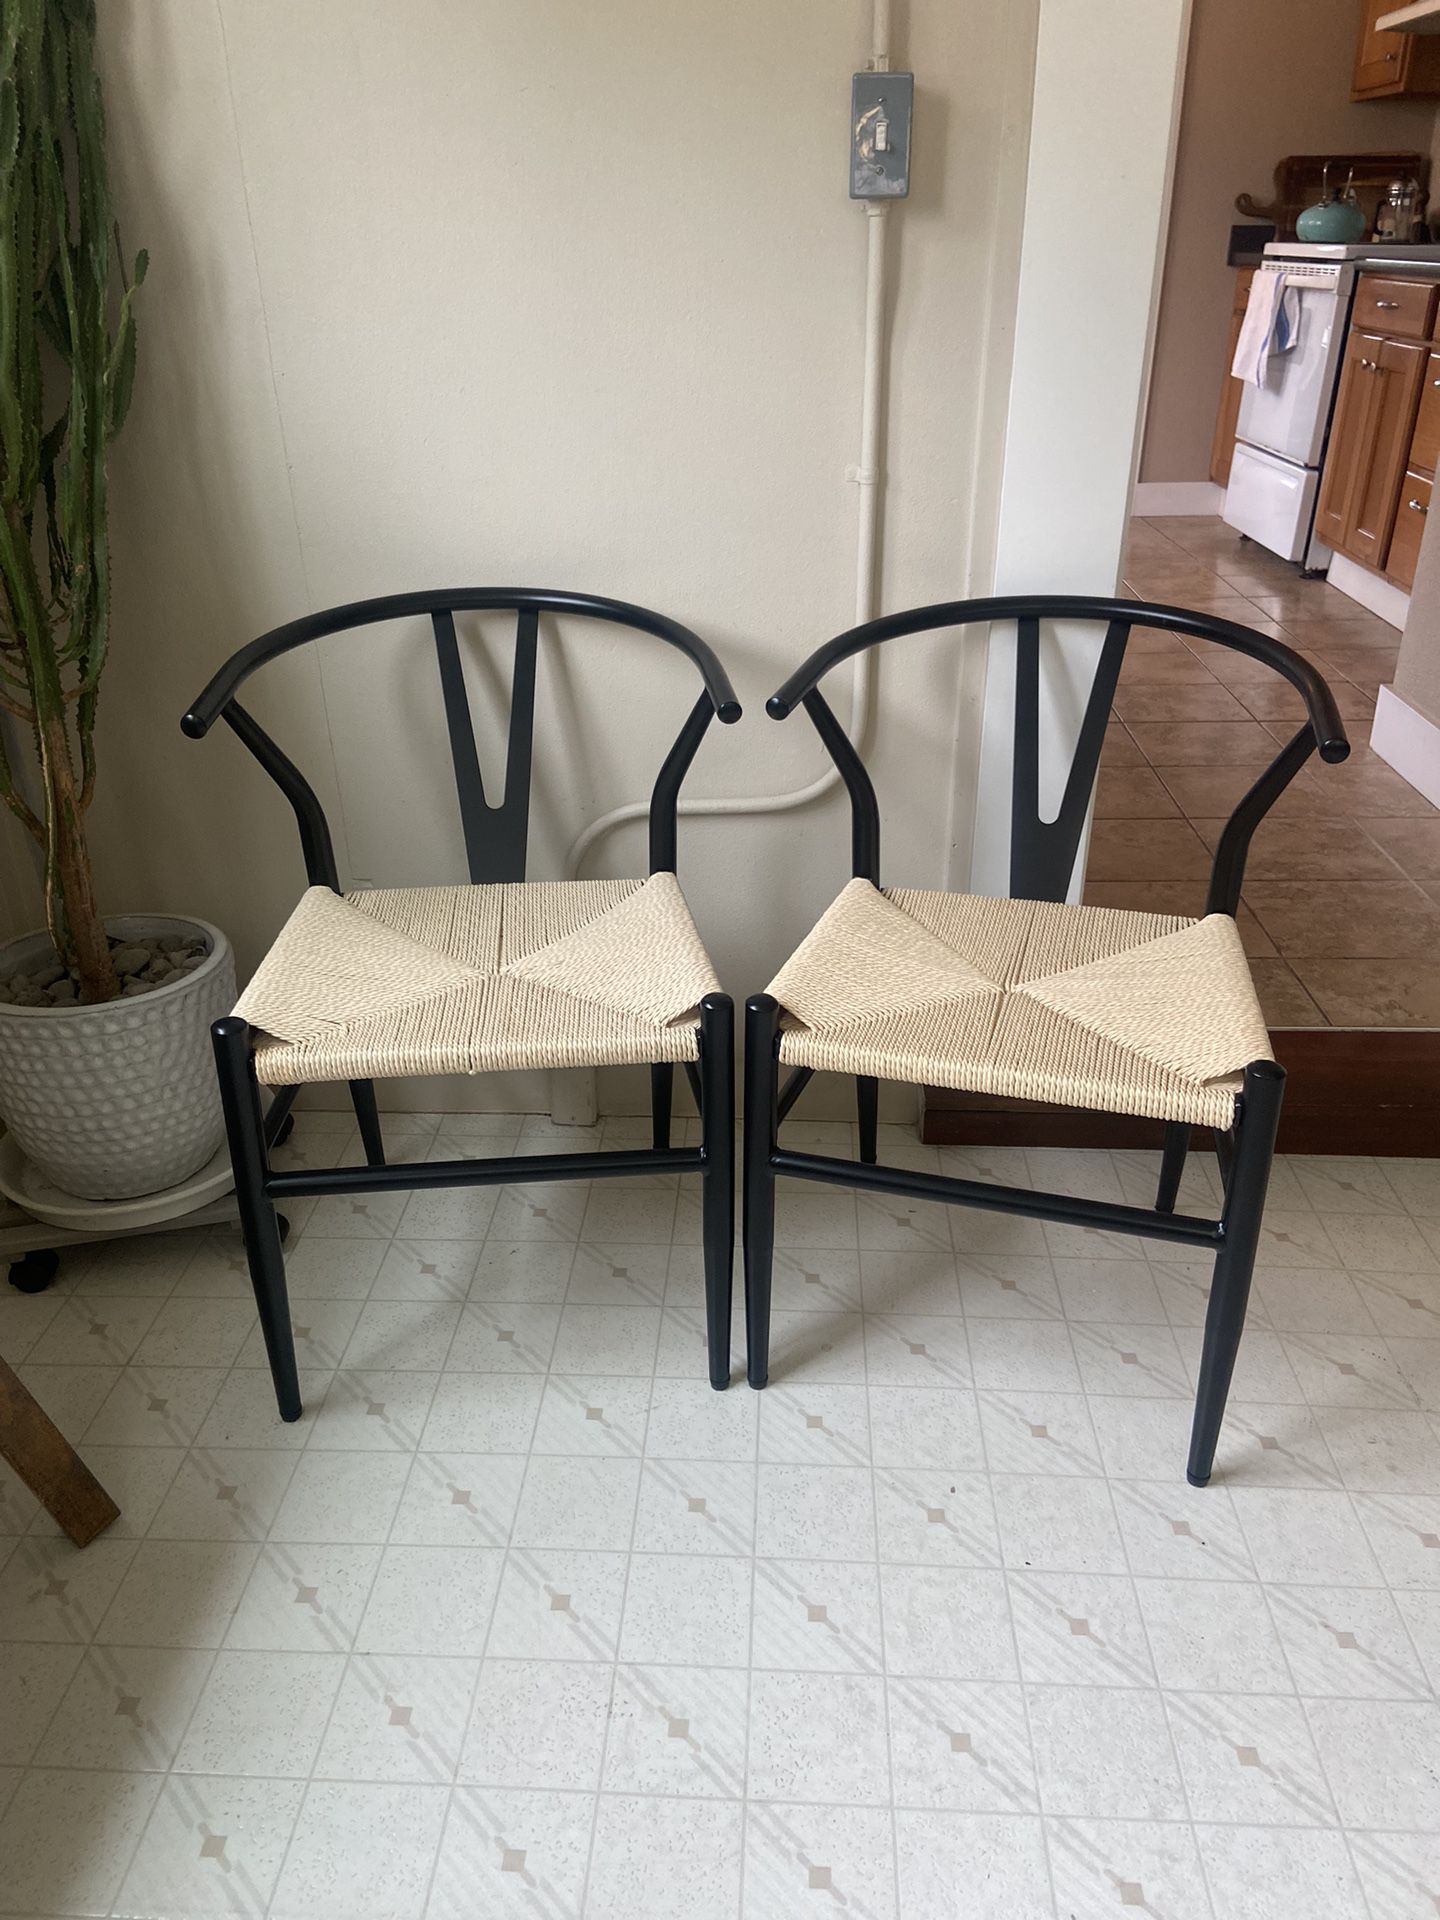 Pair of Metal Wishbone Chairs